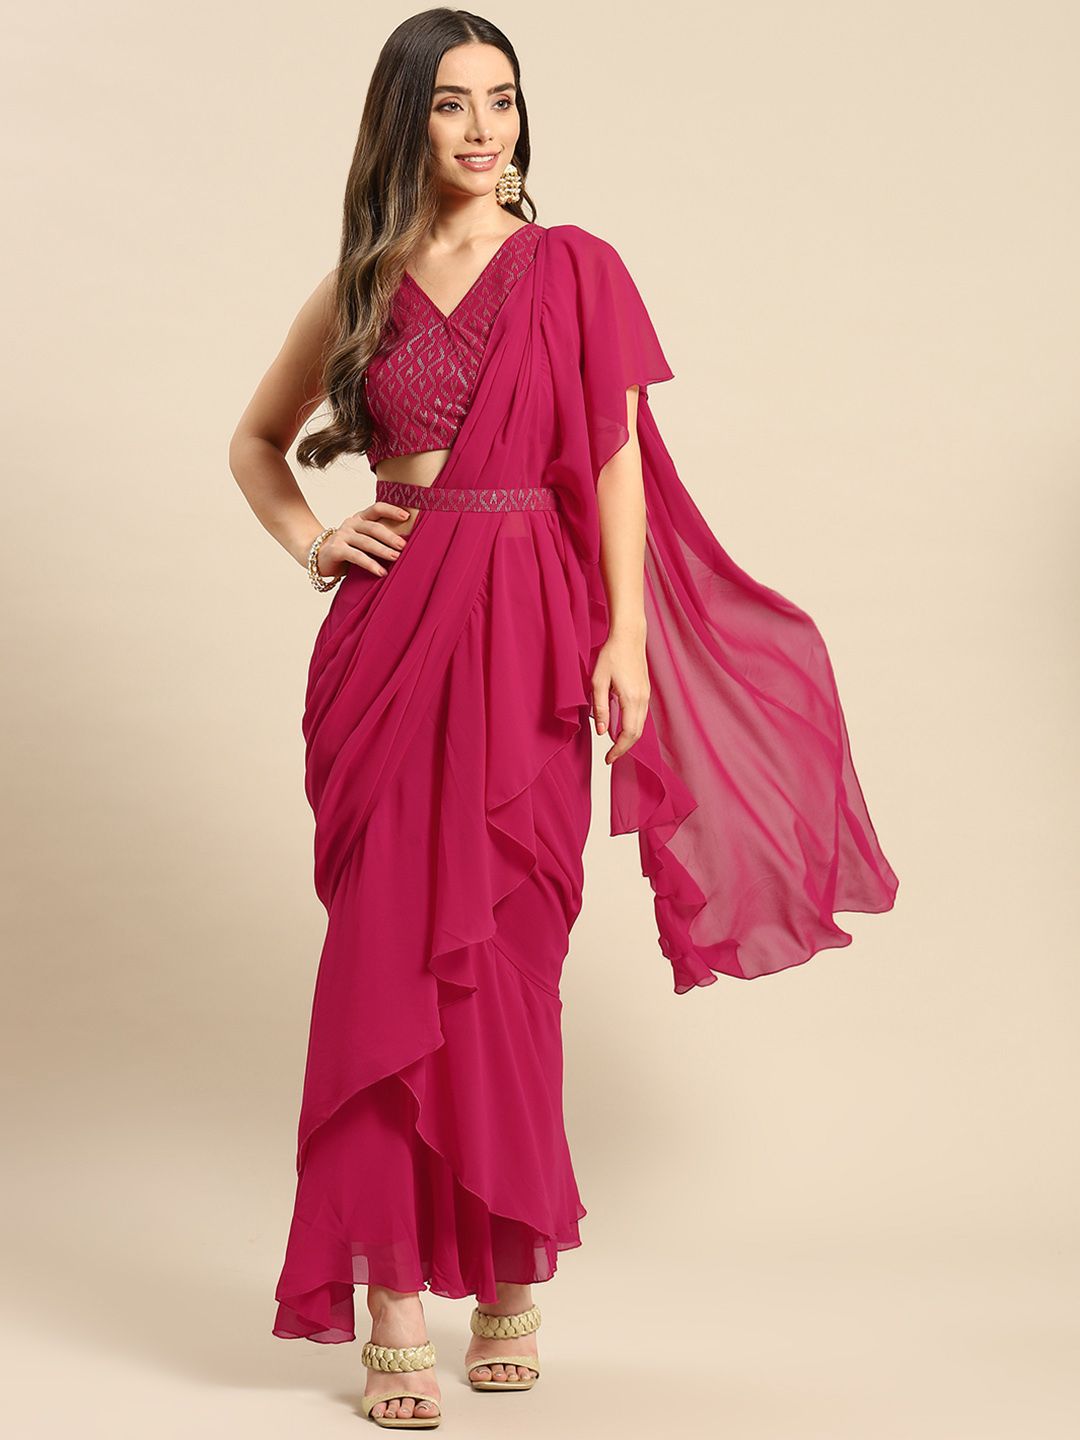 MABISH by Sonal Jain Magenta Ruffled Ready to Wear Saree Price in India